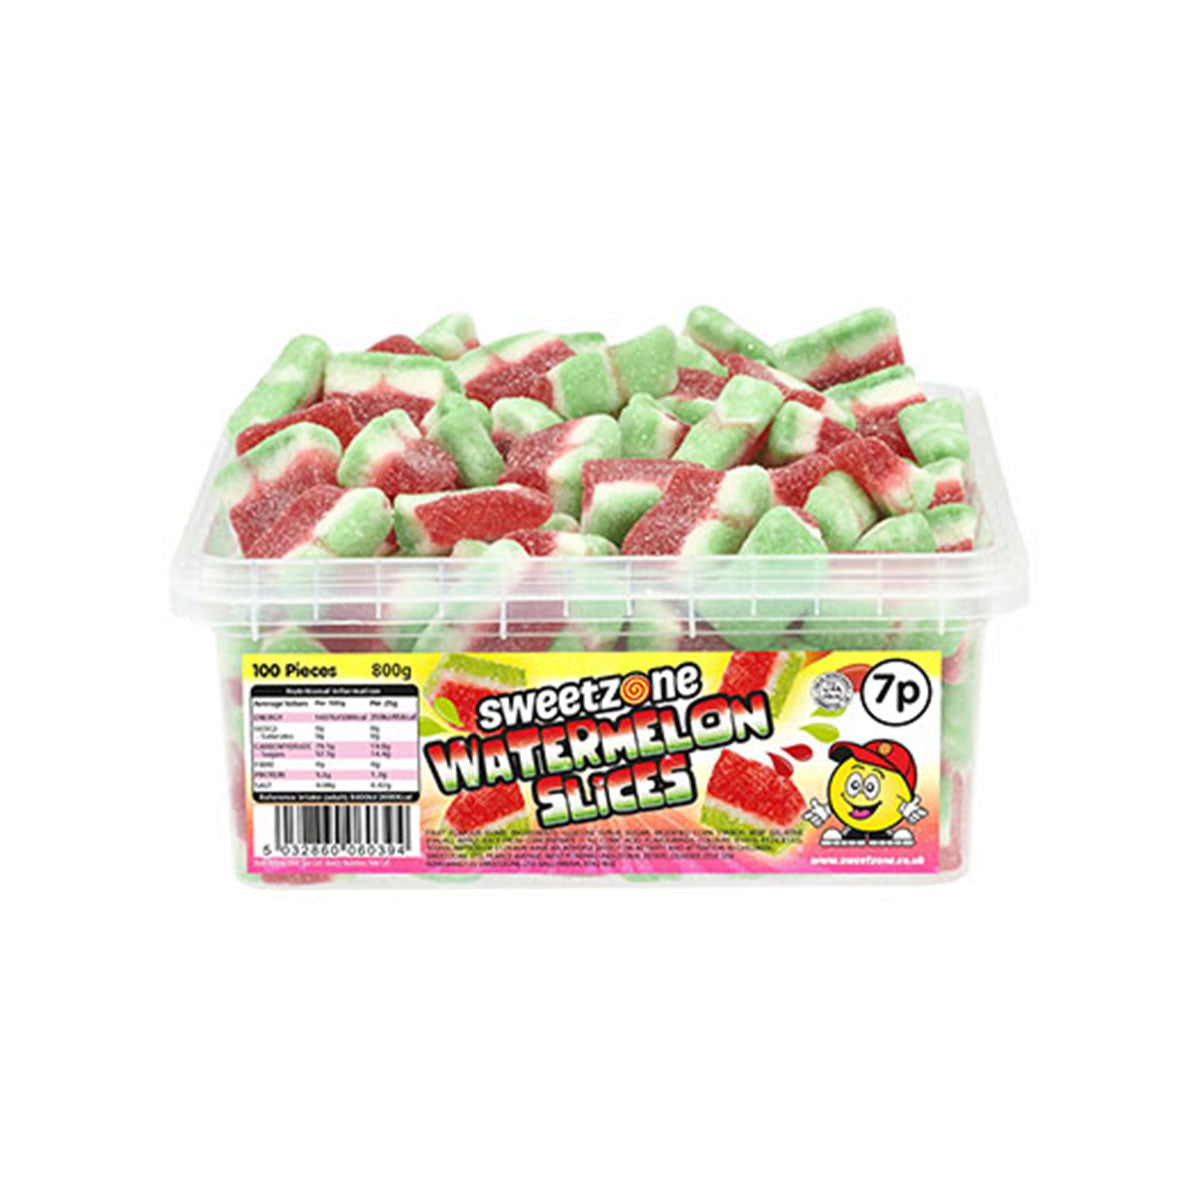 Sweetzone Tub - Watermelon Slices